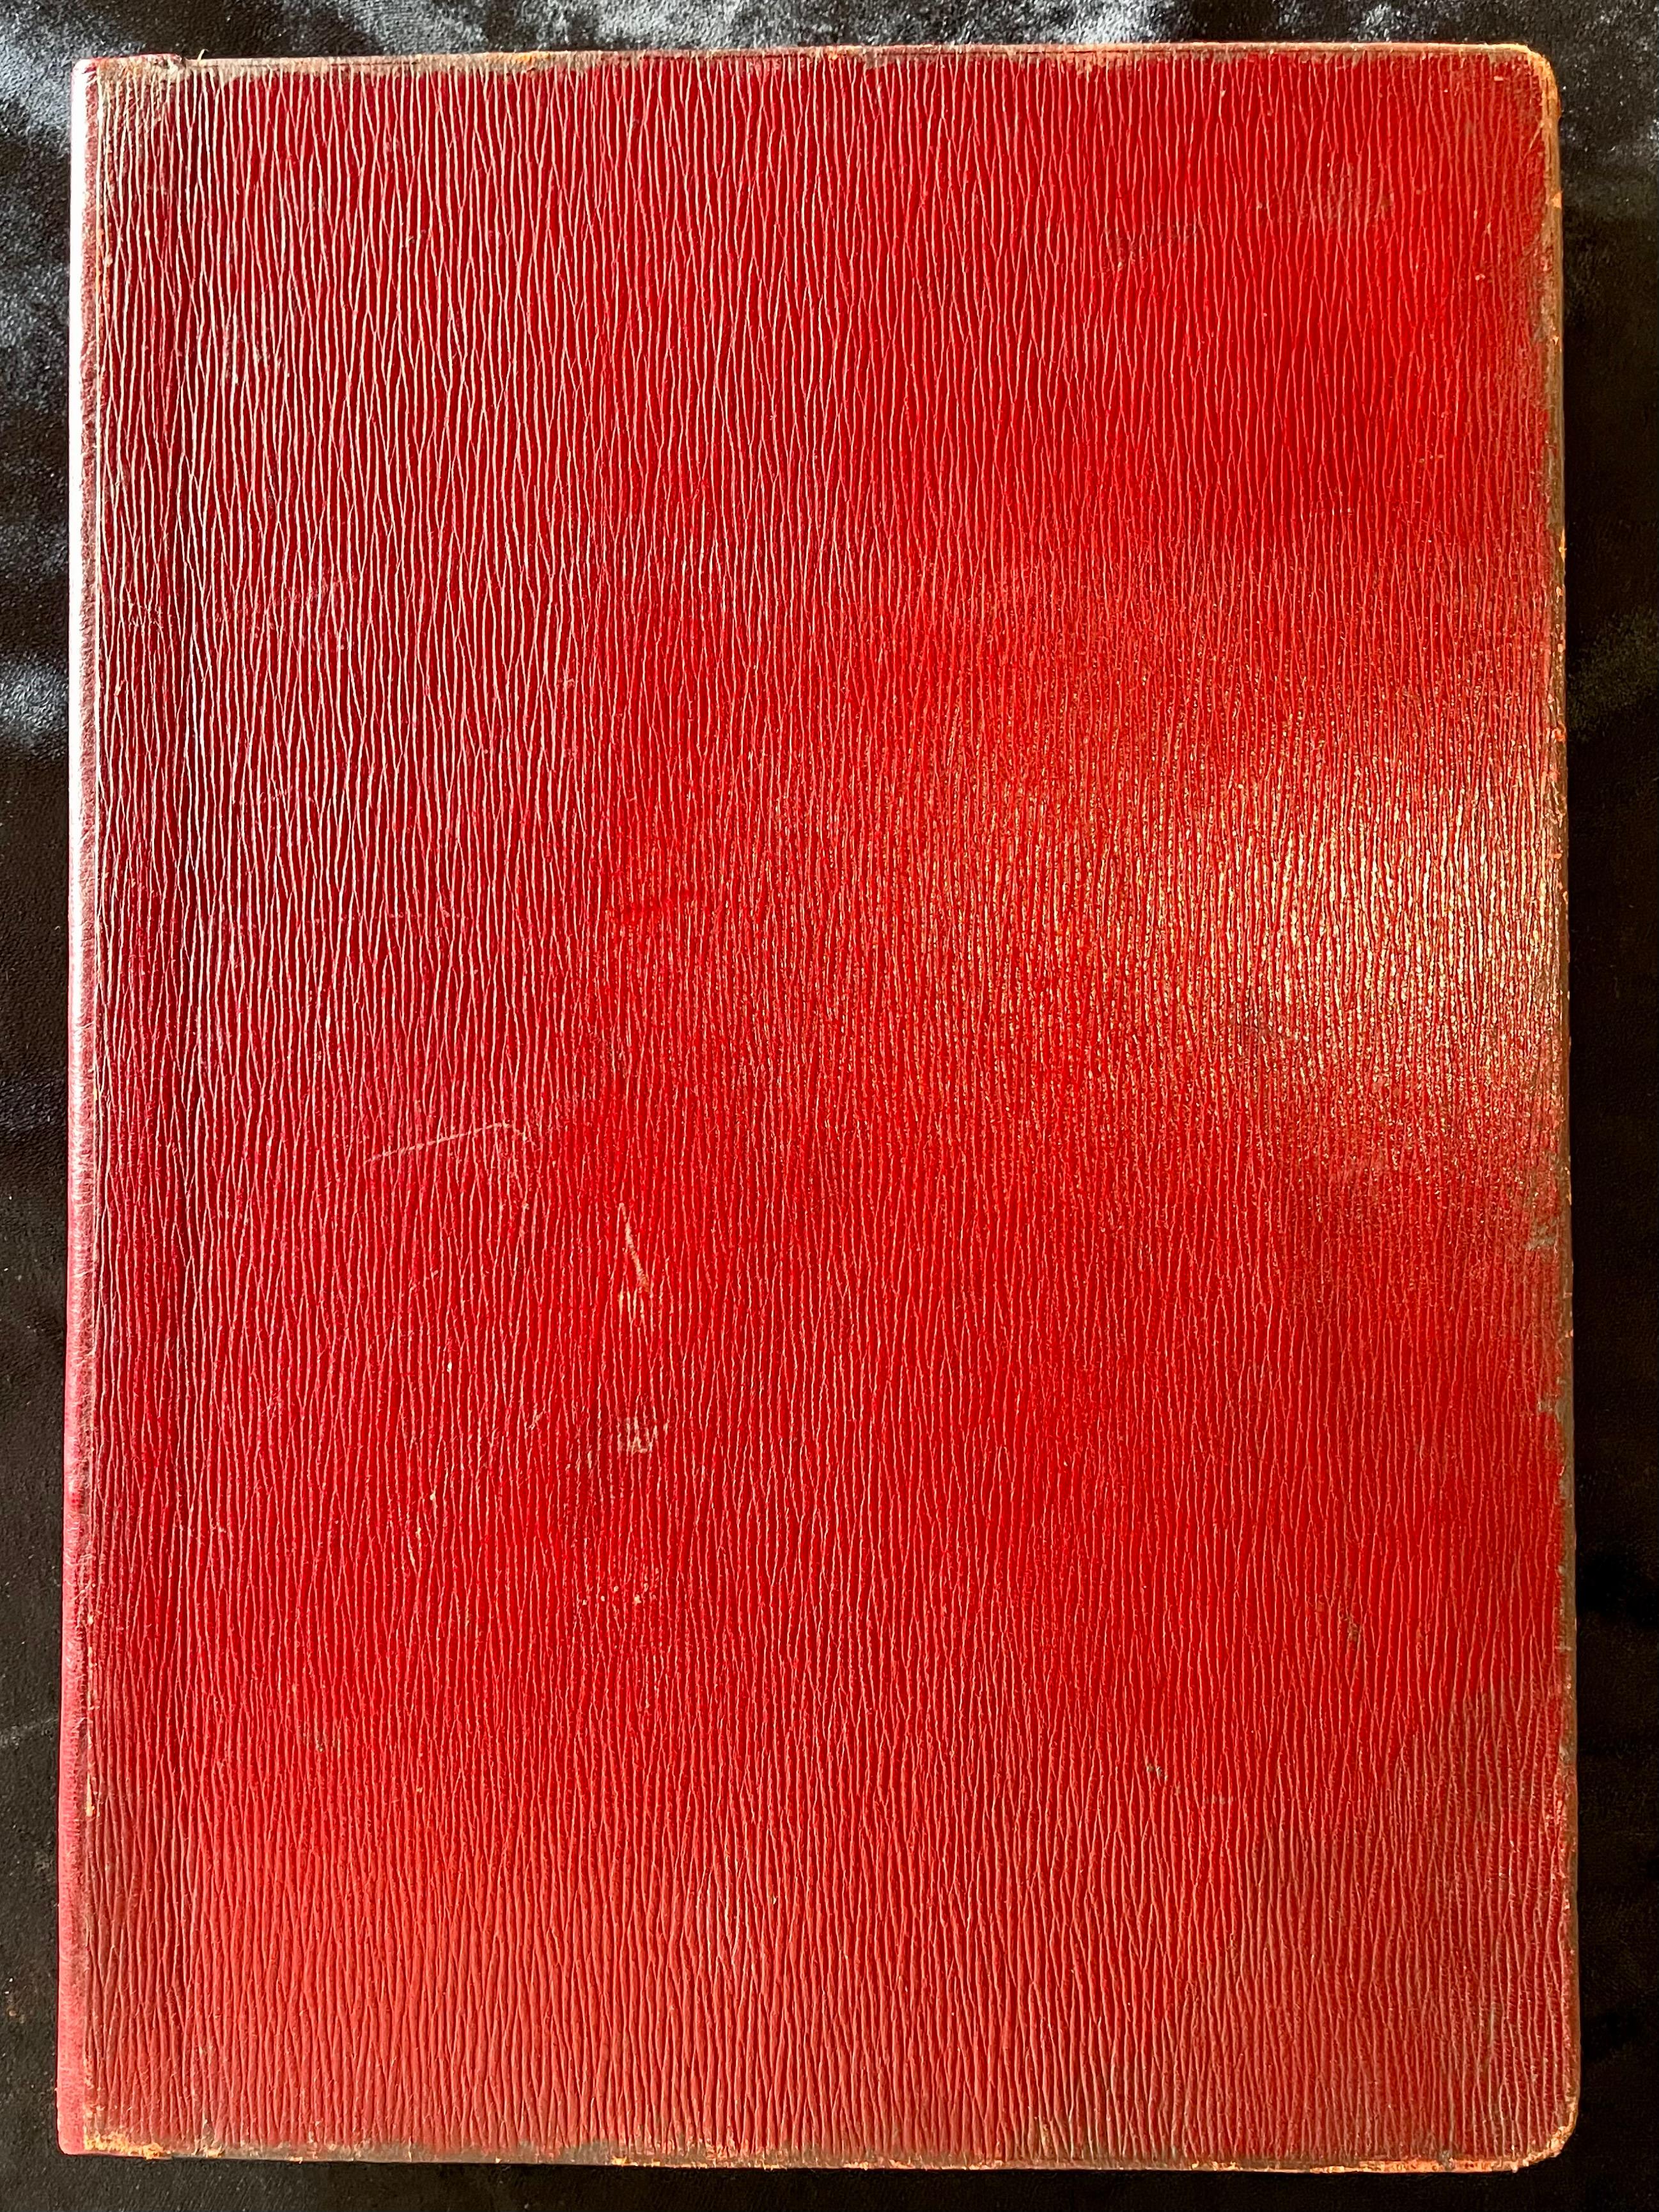 Ornate Sterling Silver Book Cover Photo Scrap Album w Red Leather Interior 9